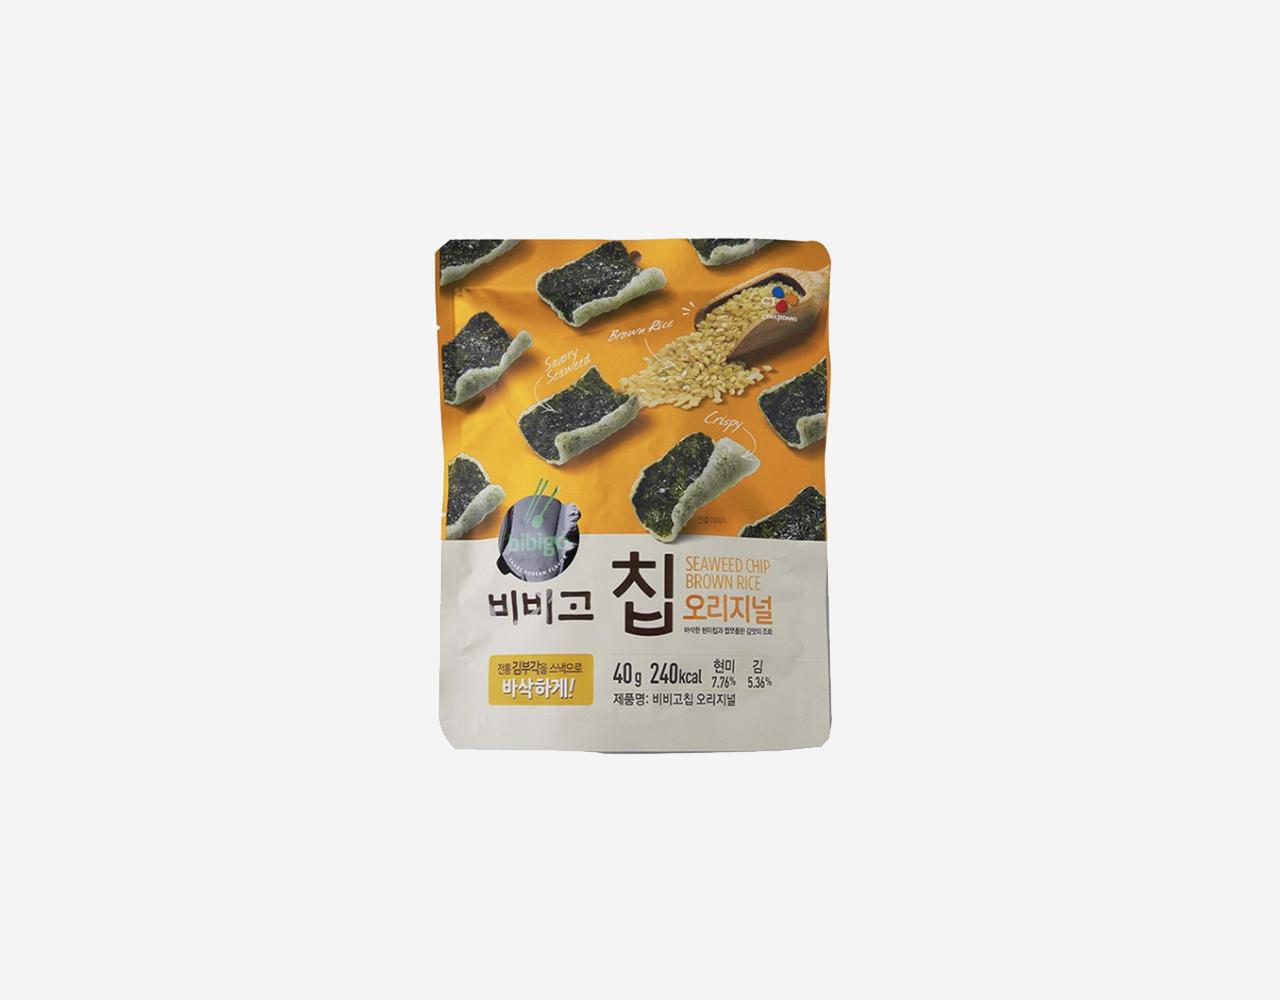 Korean brand bibigo's Seaweed Crisps Original pack in yellow